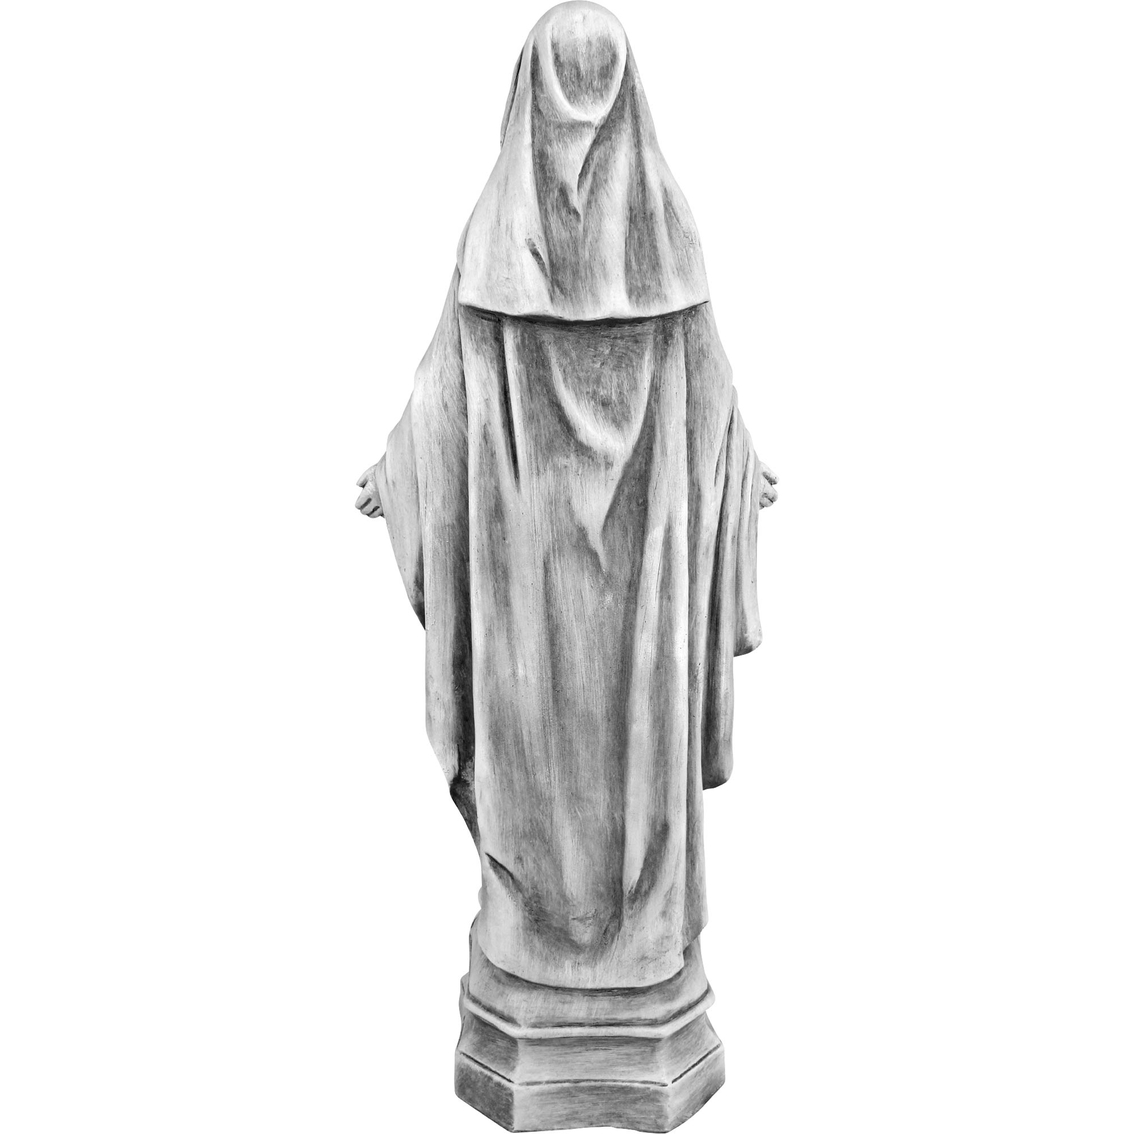 Design Toscano Madonna of Notre Dame Garden Statue: Medium - Image 3 of 4